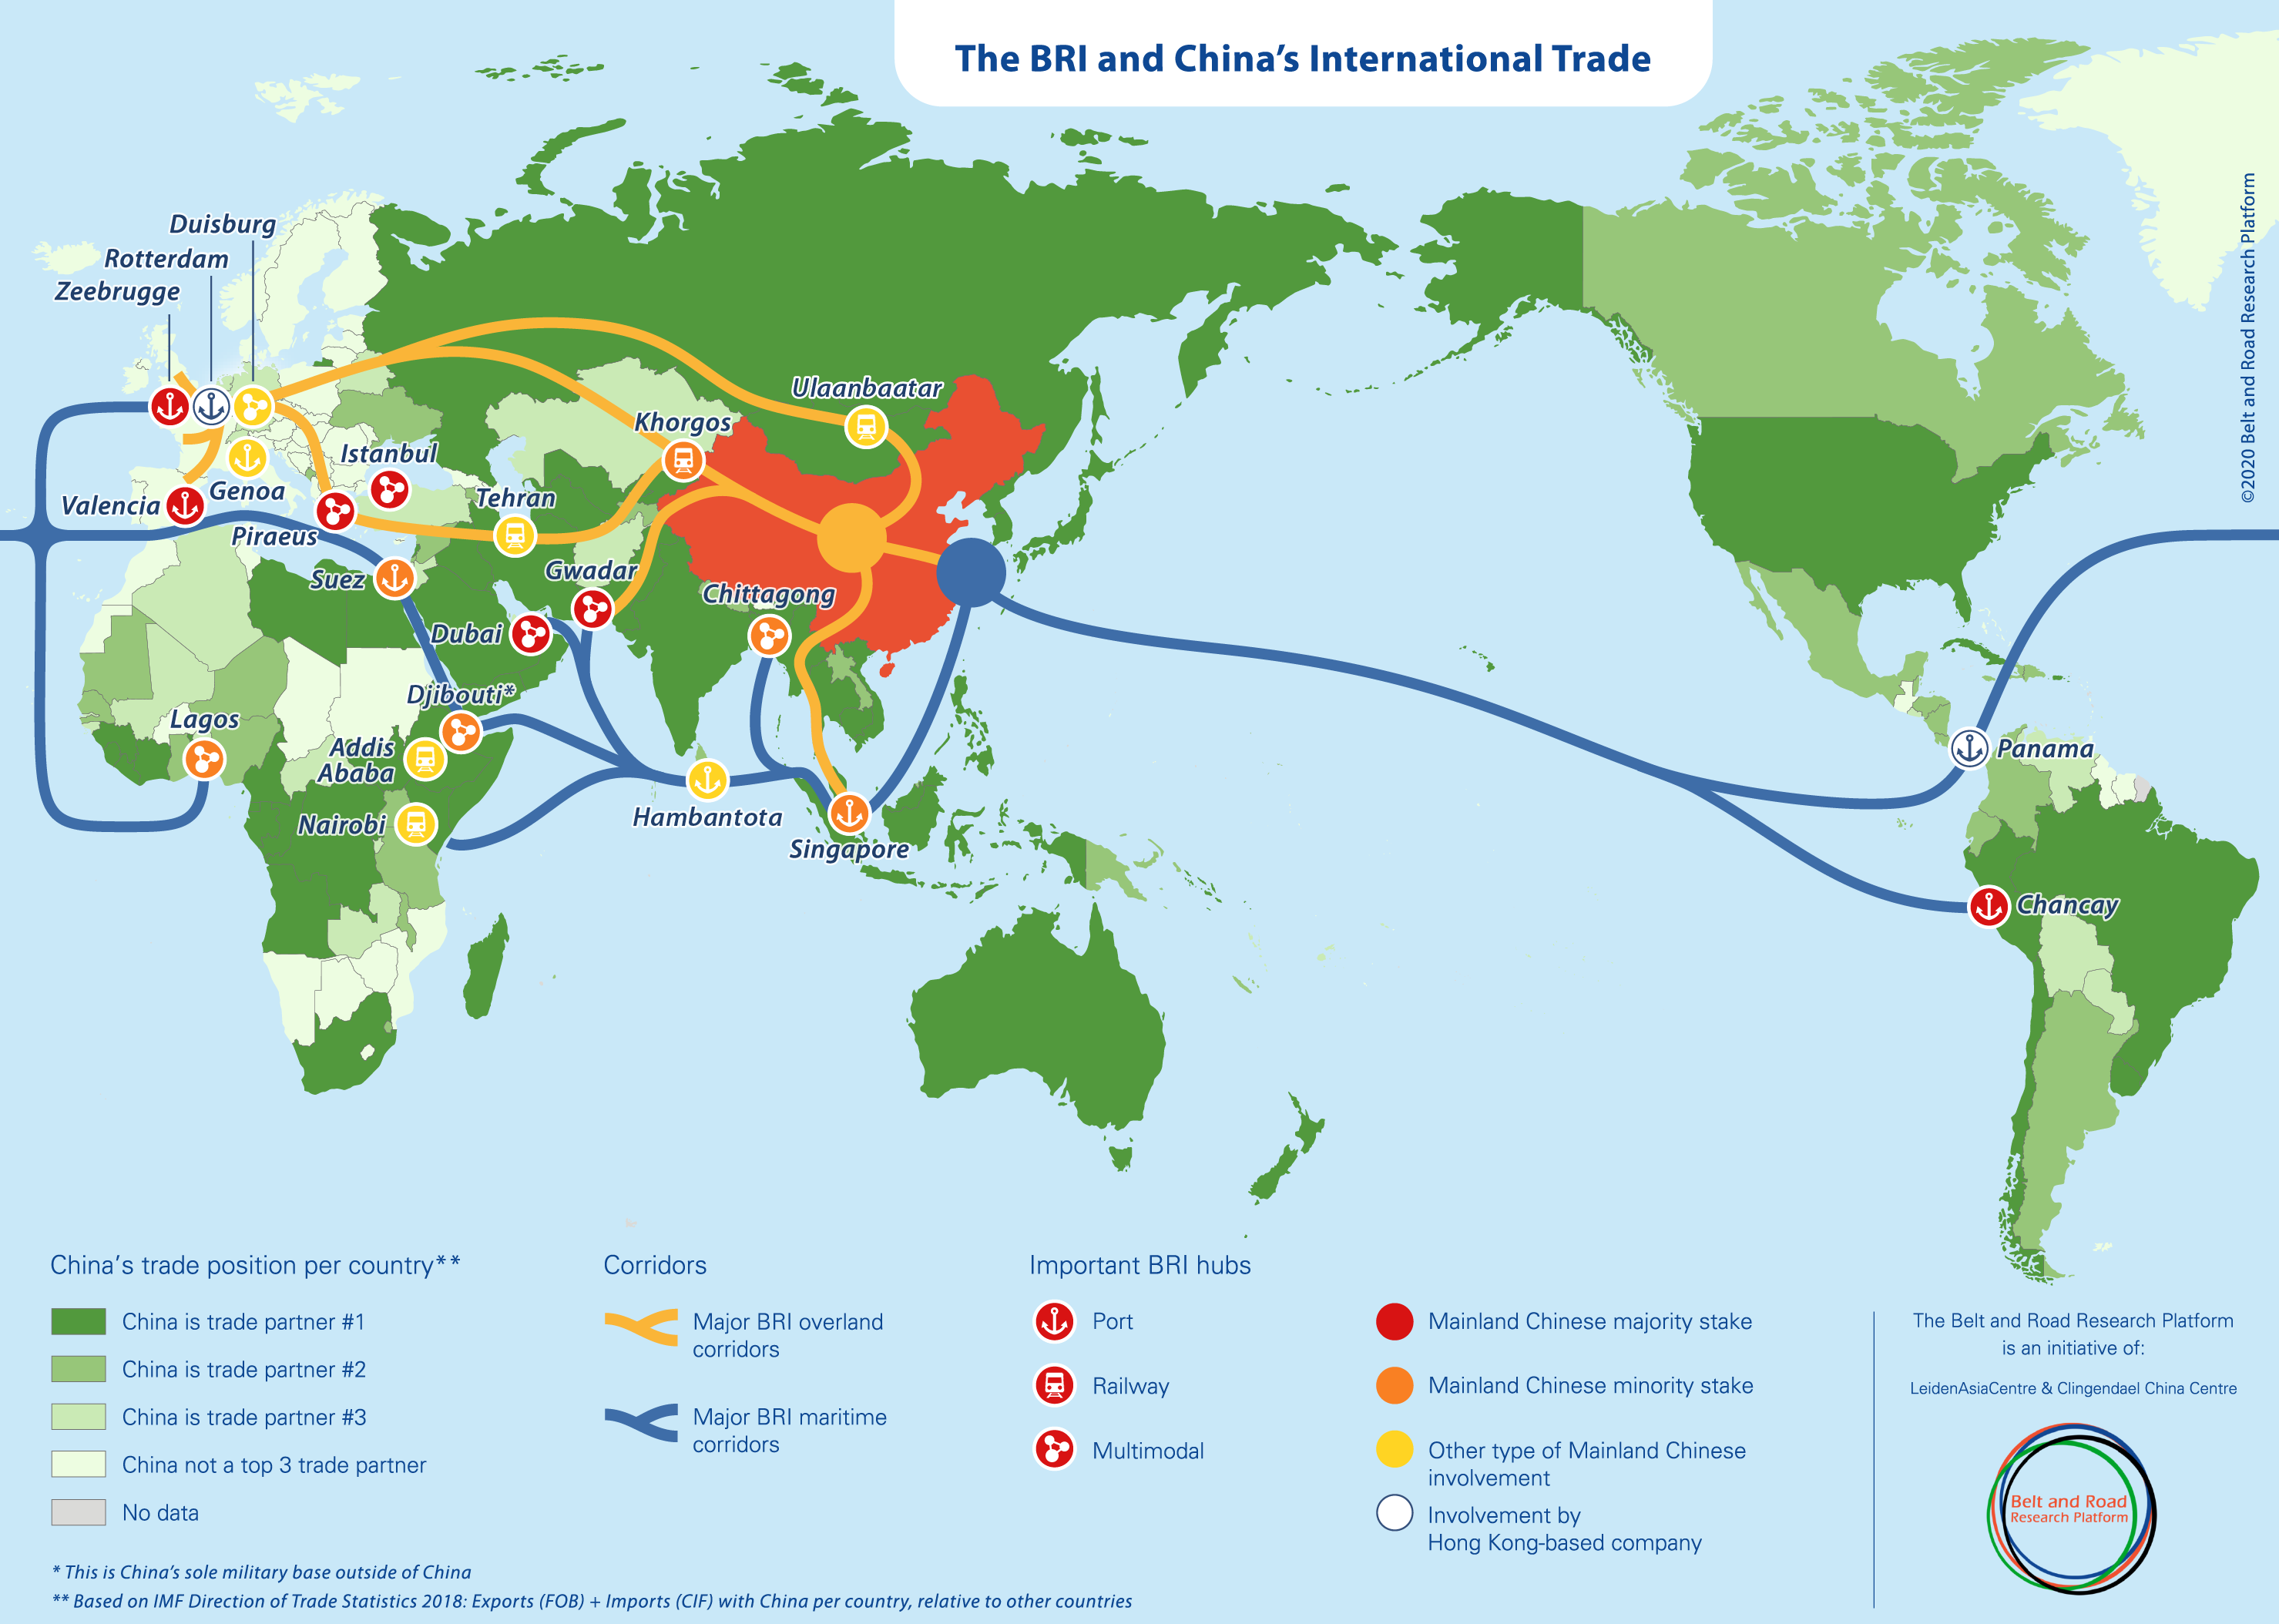 The BRI and China's International Trade